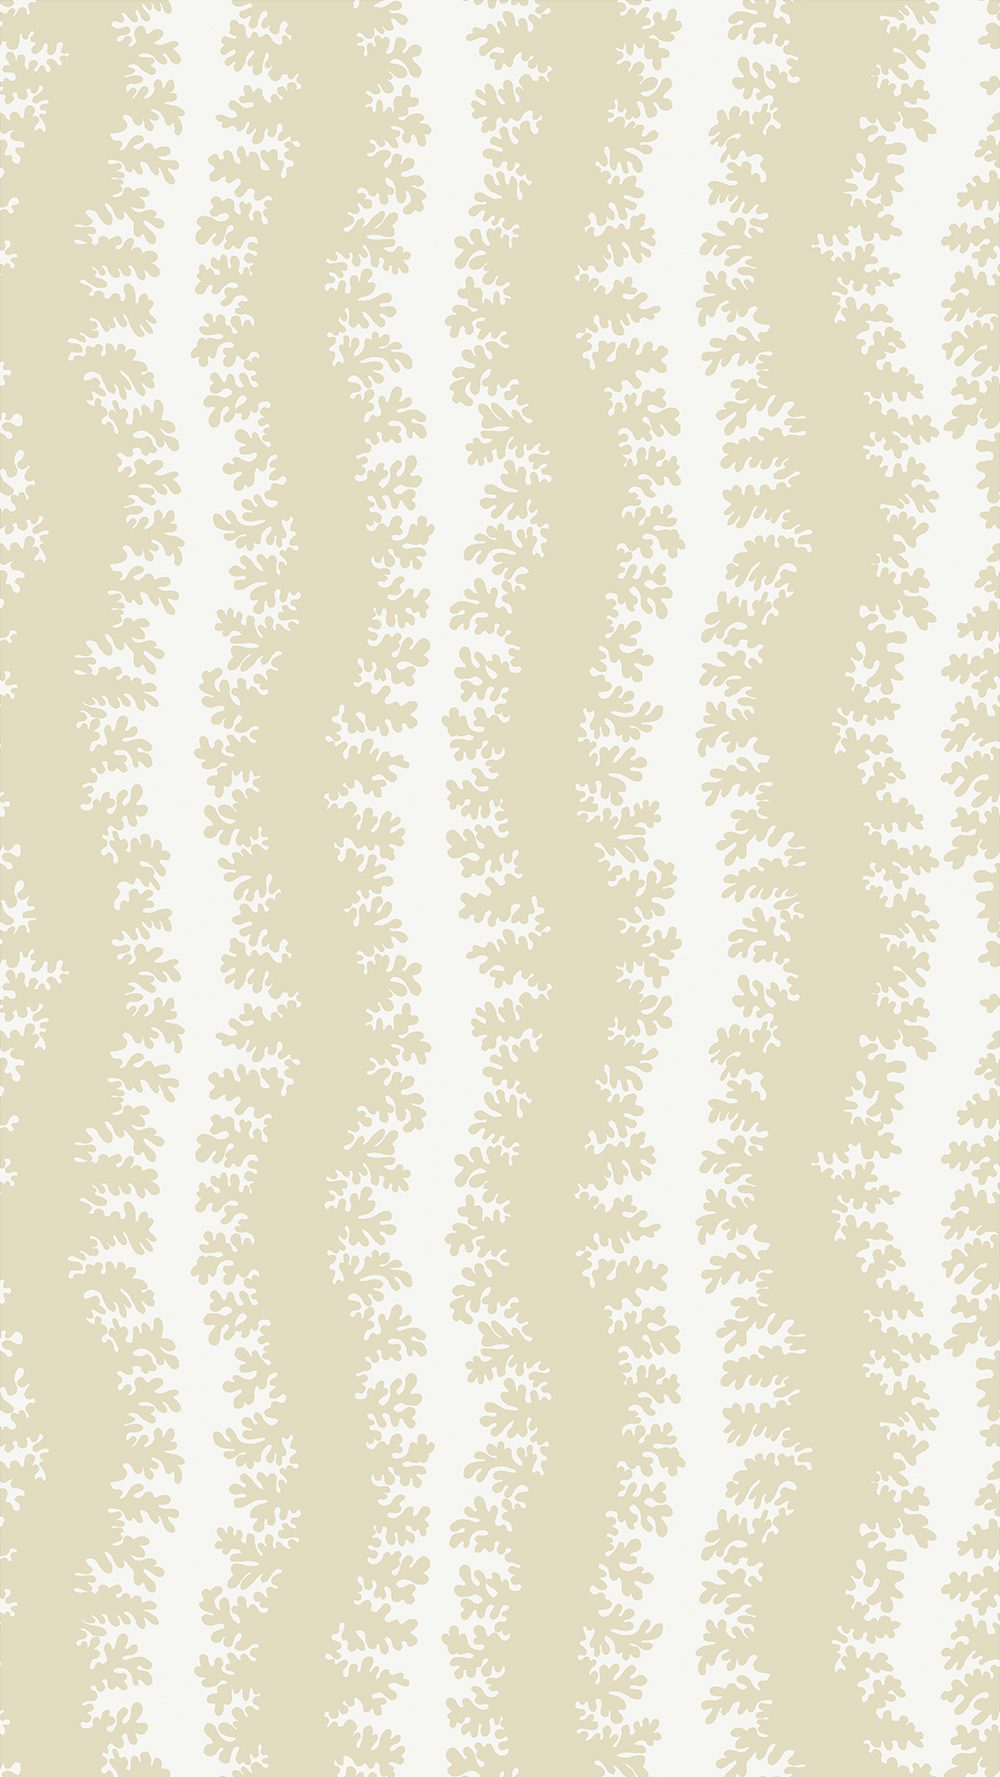 Josephine-Munsey-Roll-collection-wallpaper-elkhorn-strope-scalloped-wave-stripe-wallpaper-elkhork-edged-silhouette-soft-edged-wide-stripe-maitland-green-ceiling-white